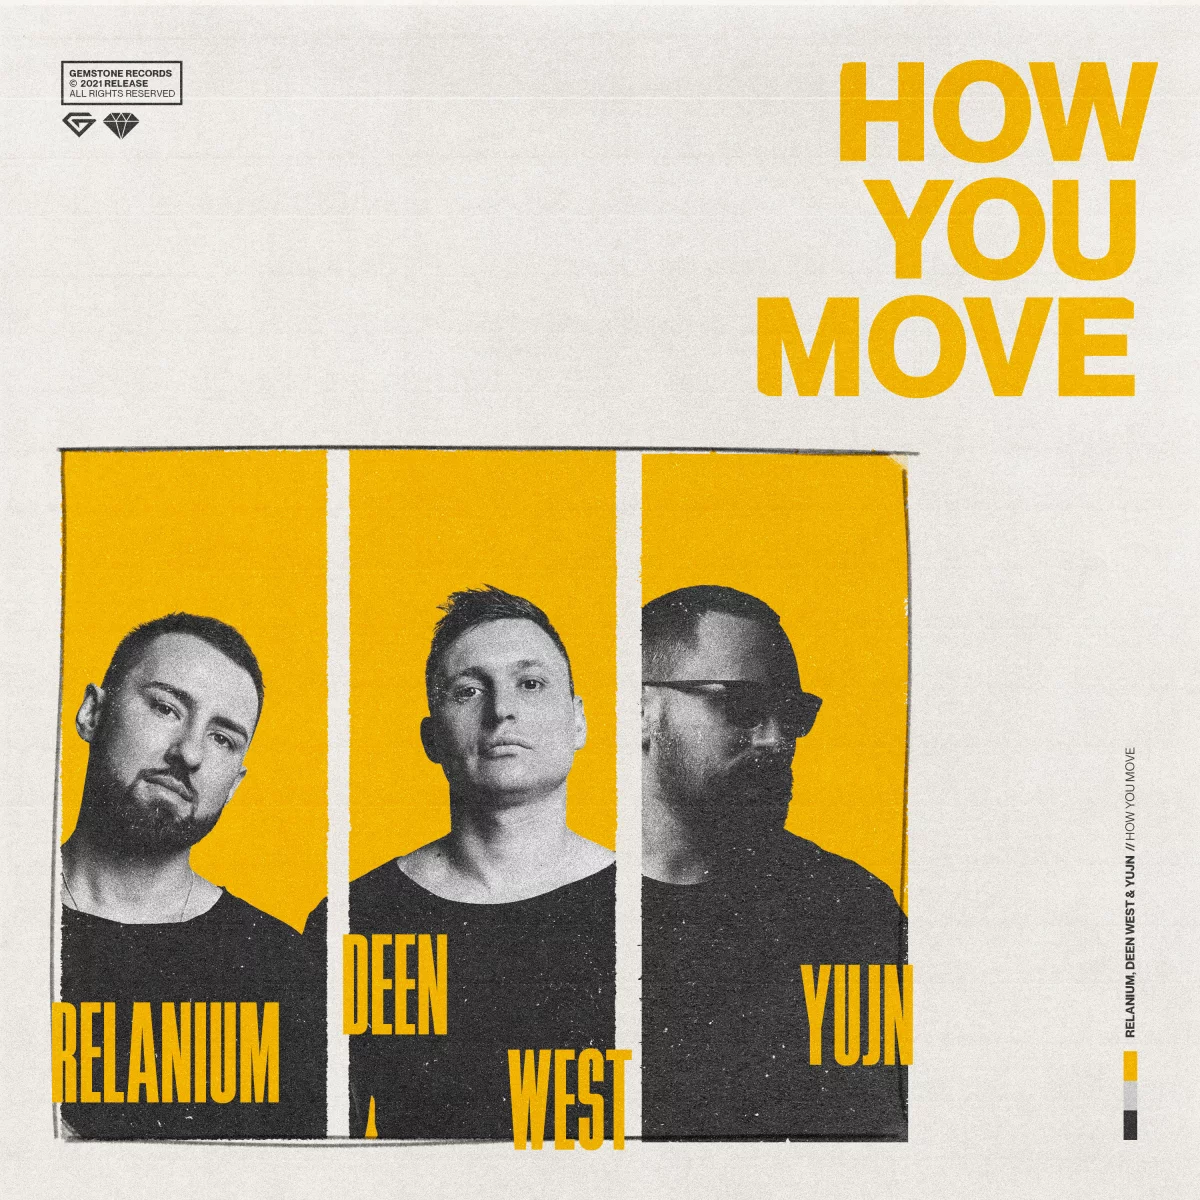 How You Move - Relanium⁠⁠, Deen West⁠ & Yujn⁠ 